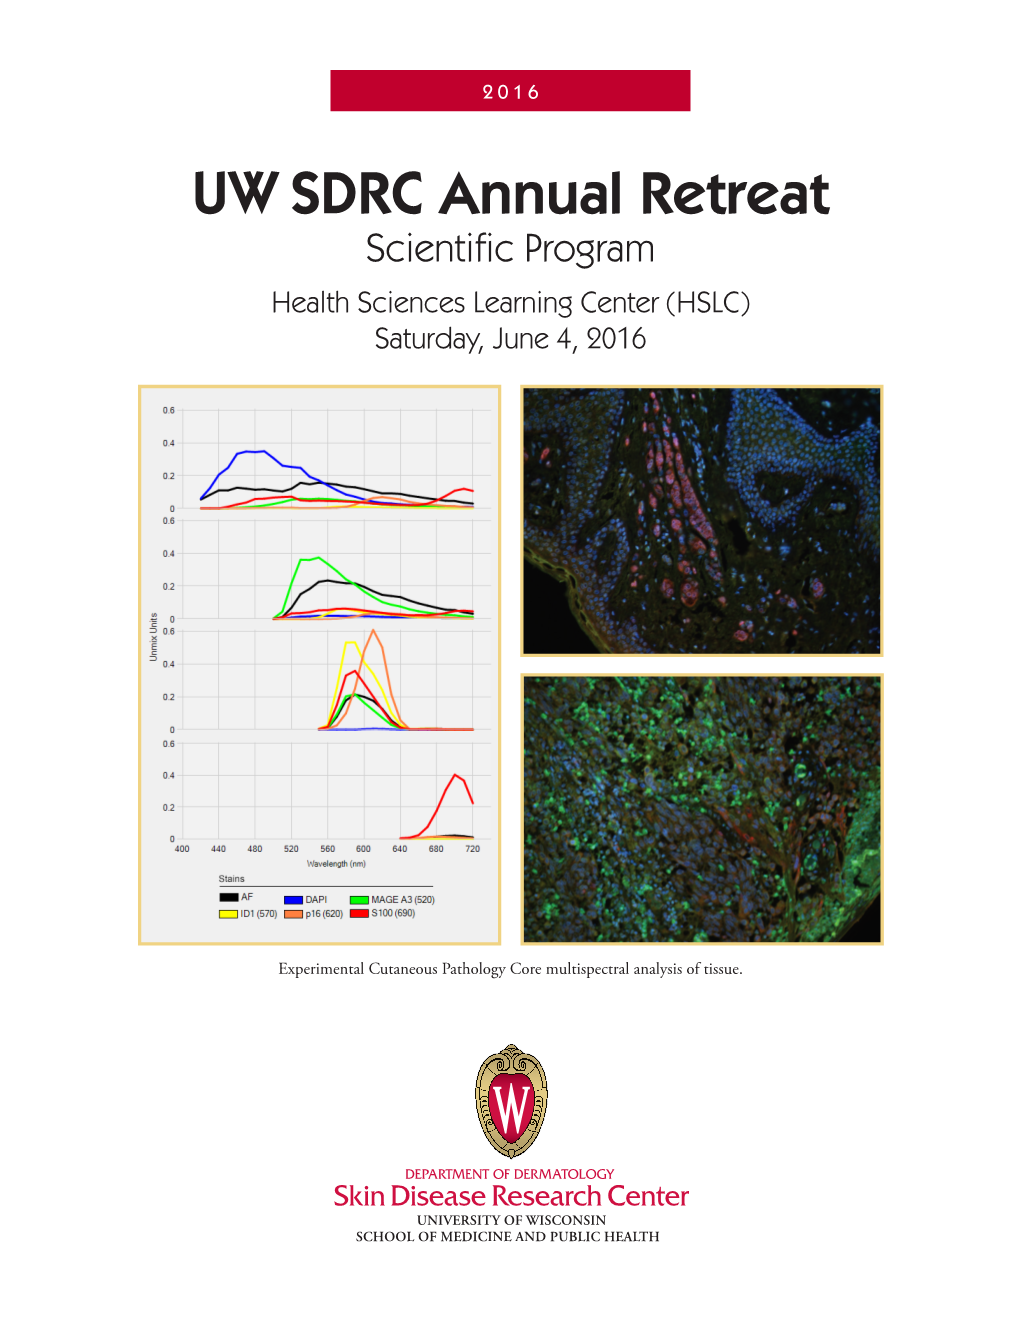 UW SDRC Annual Retreat Scientific Program Health Sciences Learning Center (HSLC) Saturday, June 4, 2016